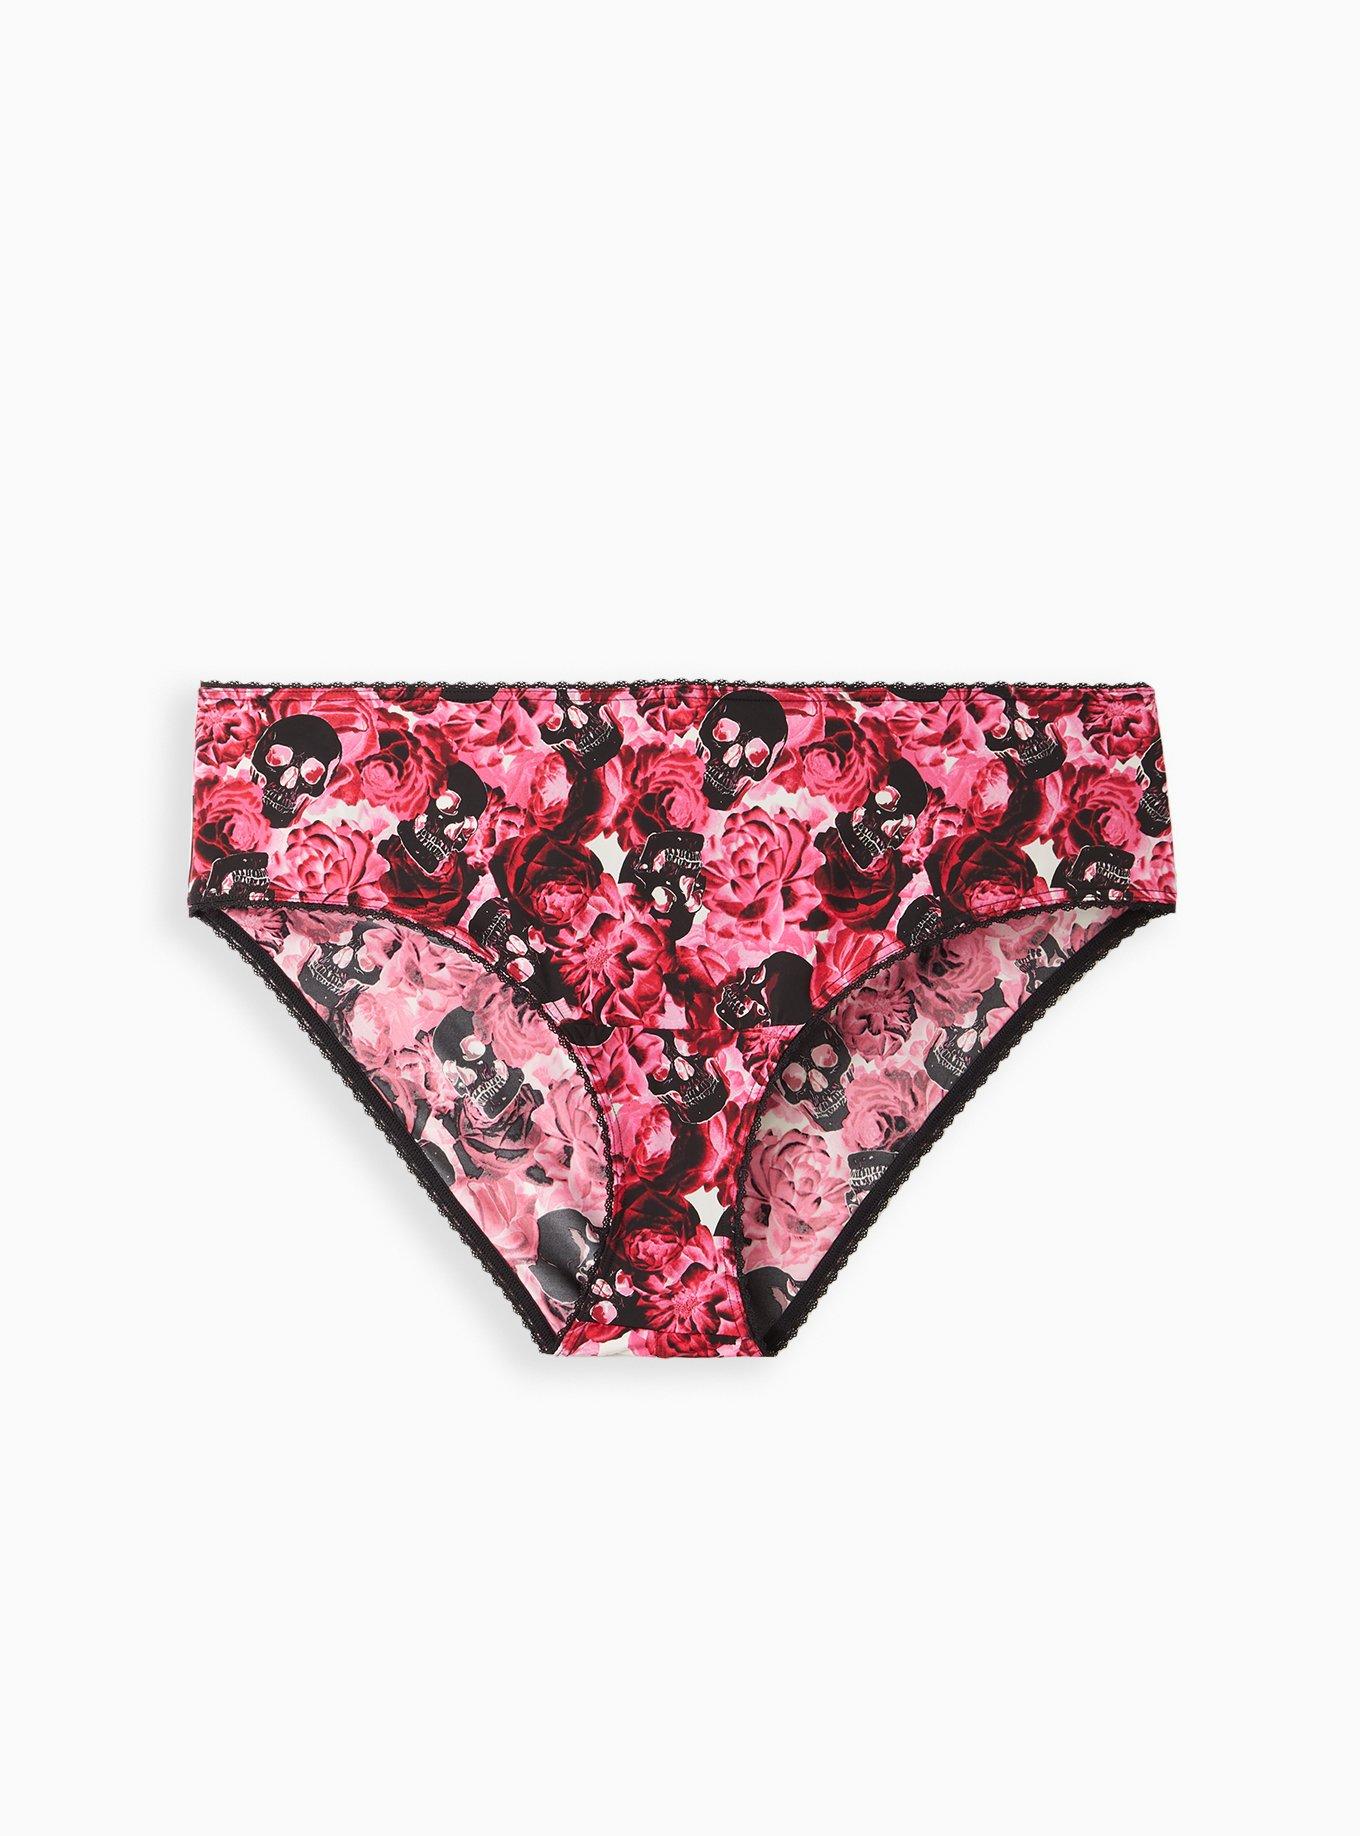 Plus Size - Light Pink Floral Lace Cage Back Hipster Panty - Torrid